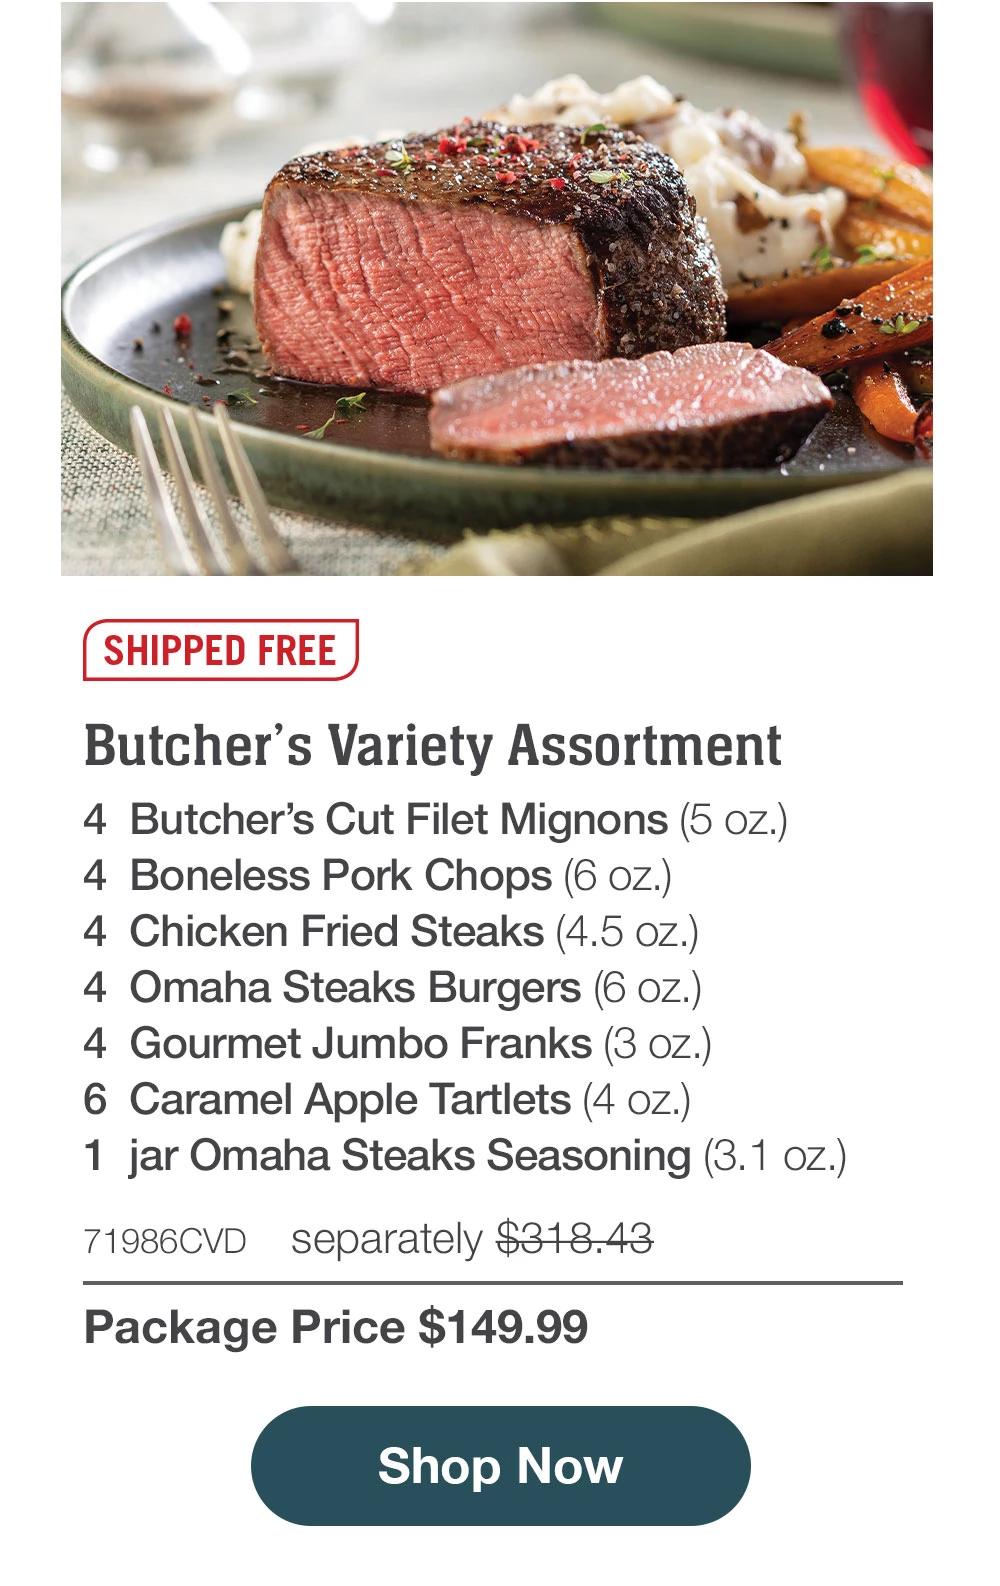 S/V Sundance Free shipping + 4 lbs. free ground beef